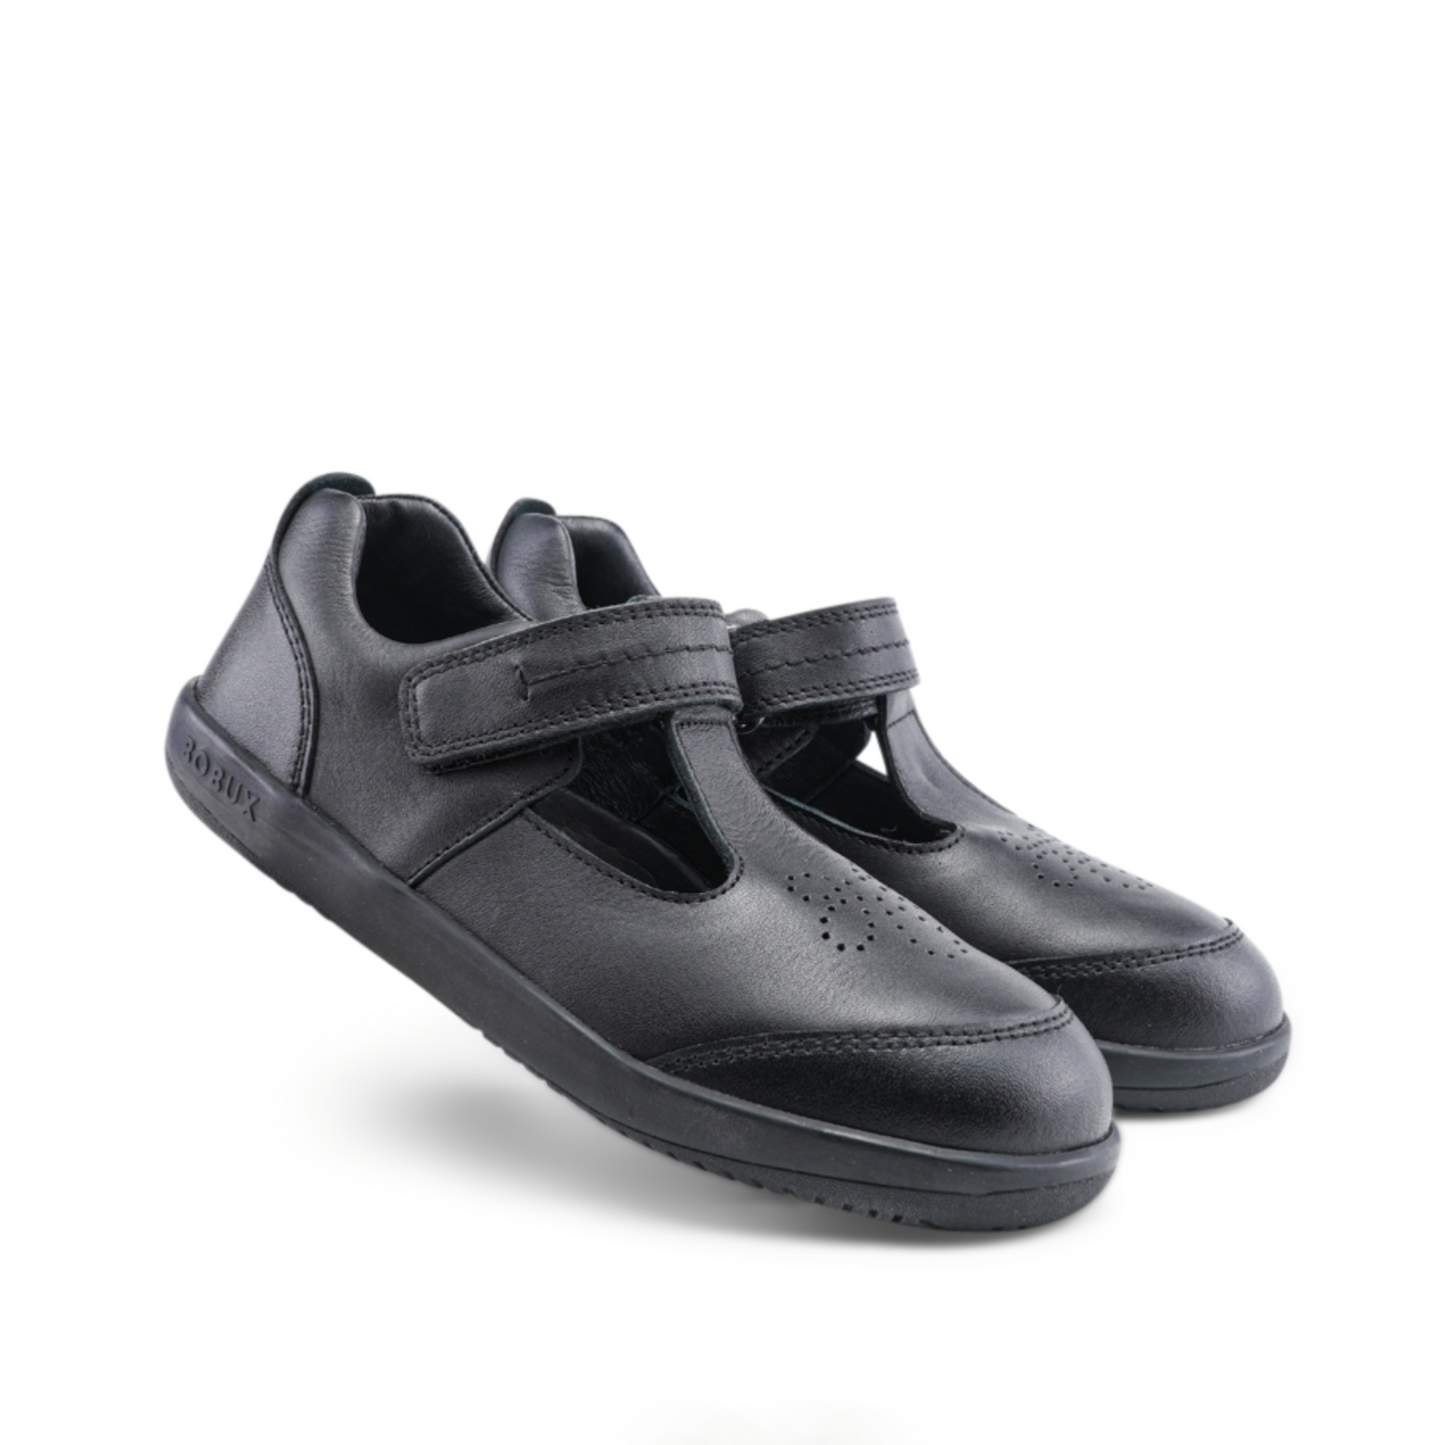 Bobux Brave Black Leather School Shoes